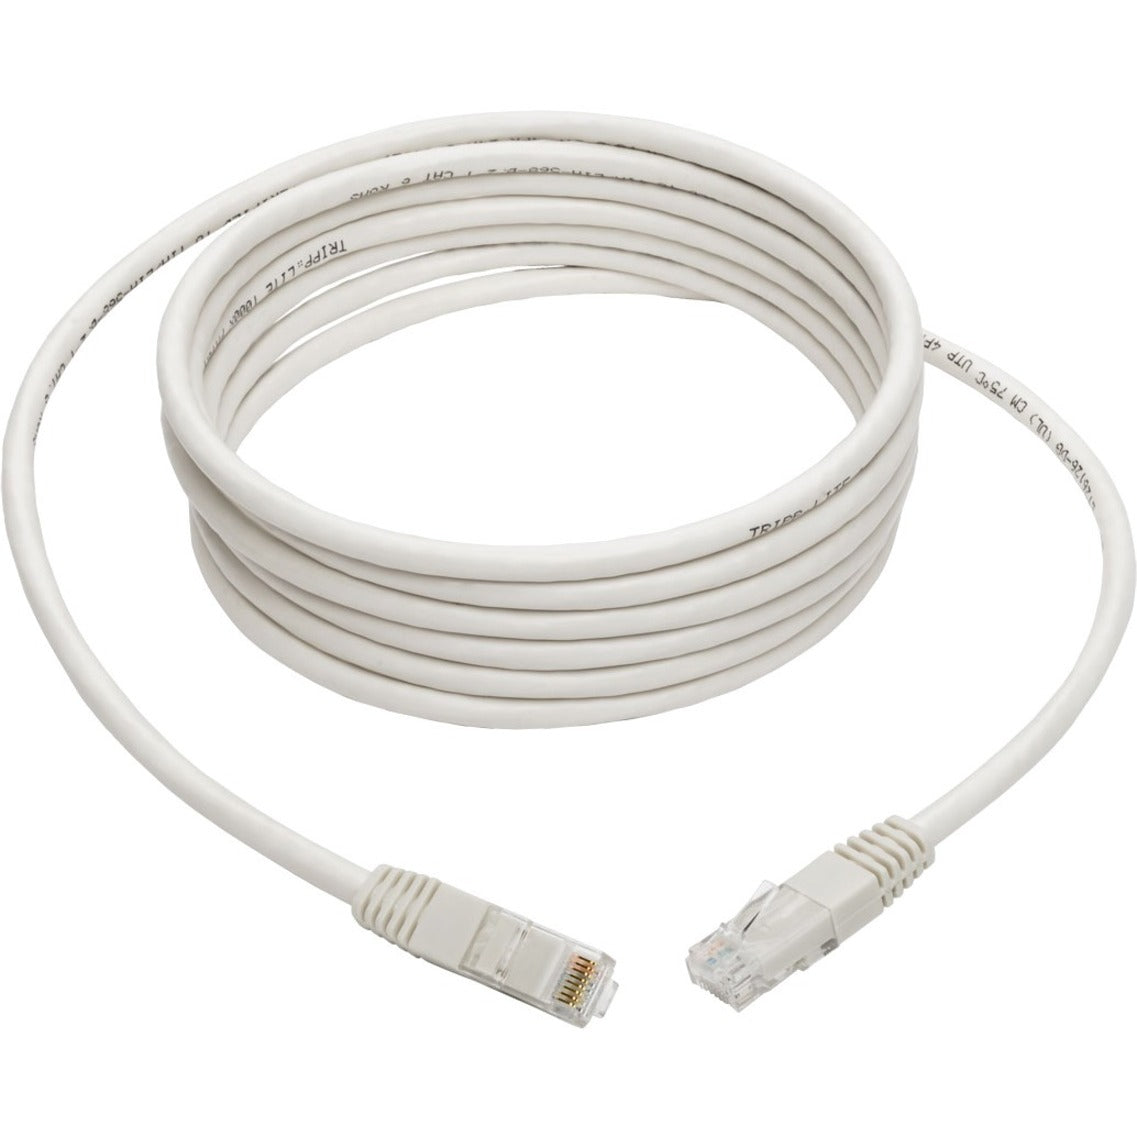 Tripp Lite N200-010-WH Cat6 Gigabit Molded Patch Cable (RJ45 M/M), White, 10 ft